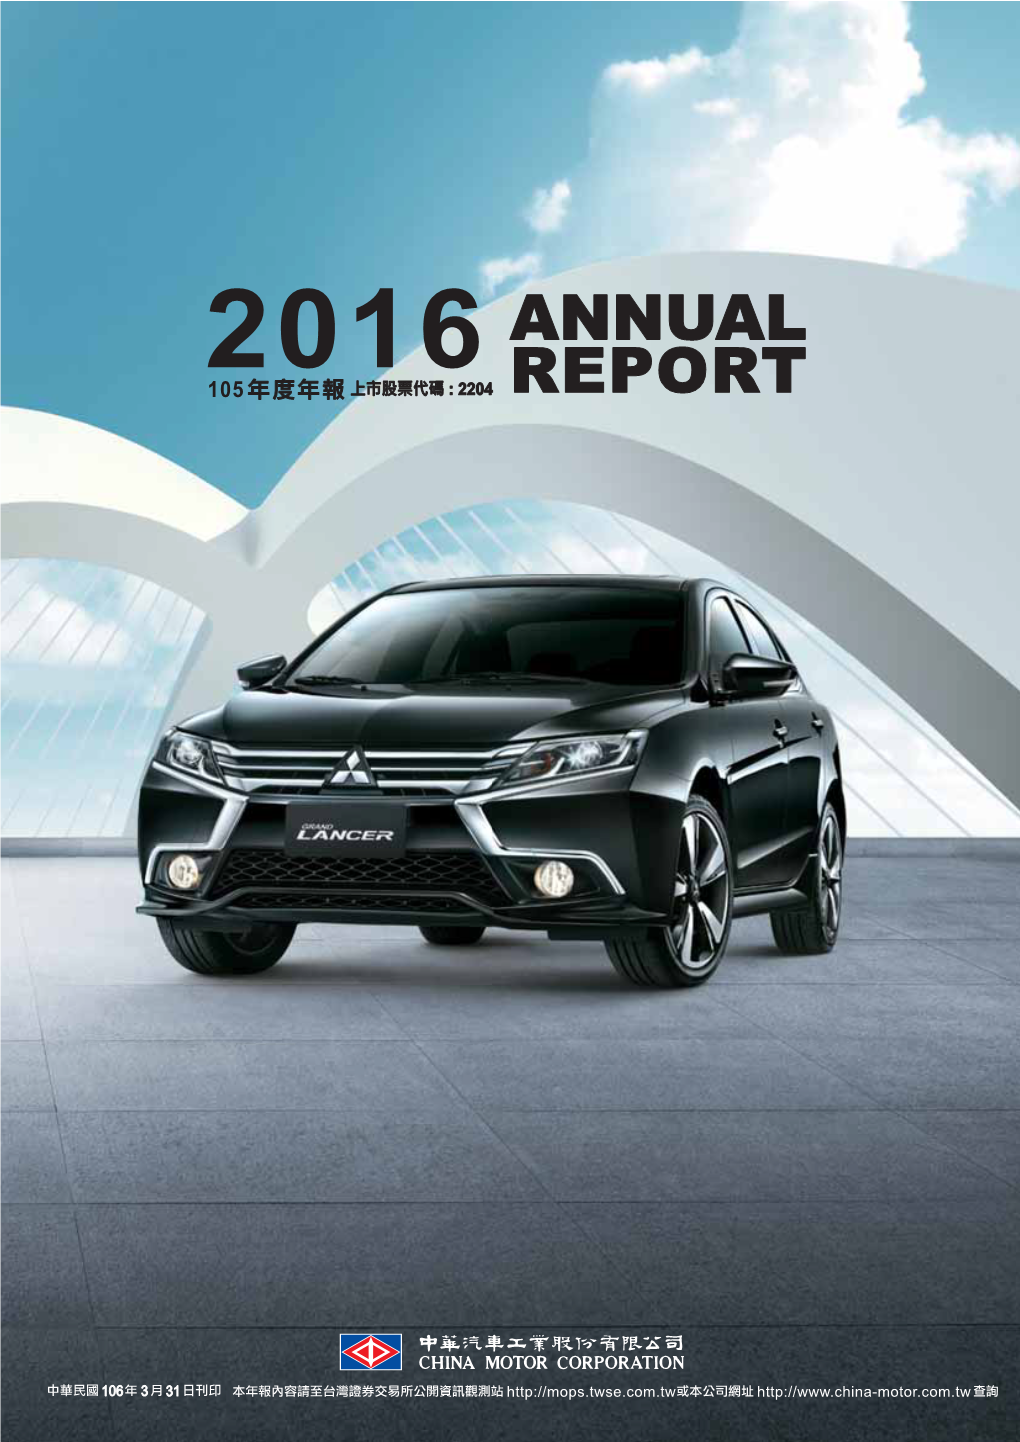 2016 Annual Report (Translation)